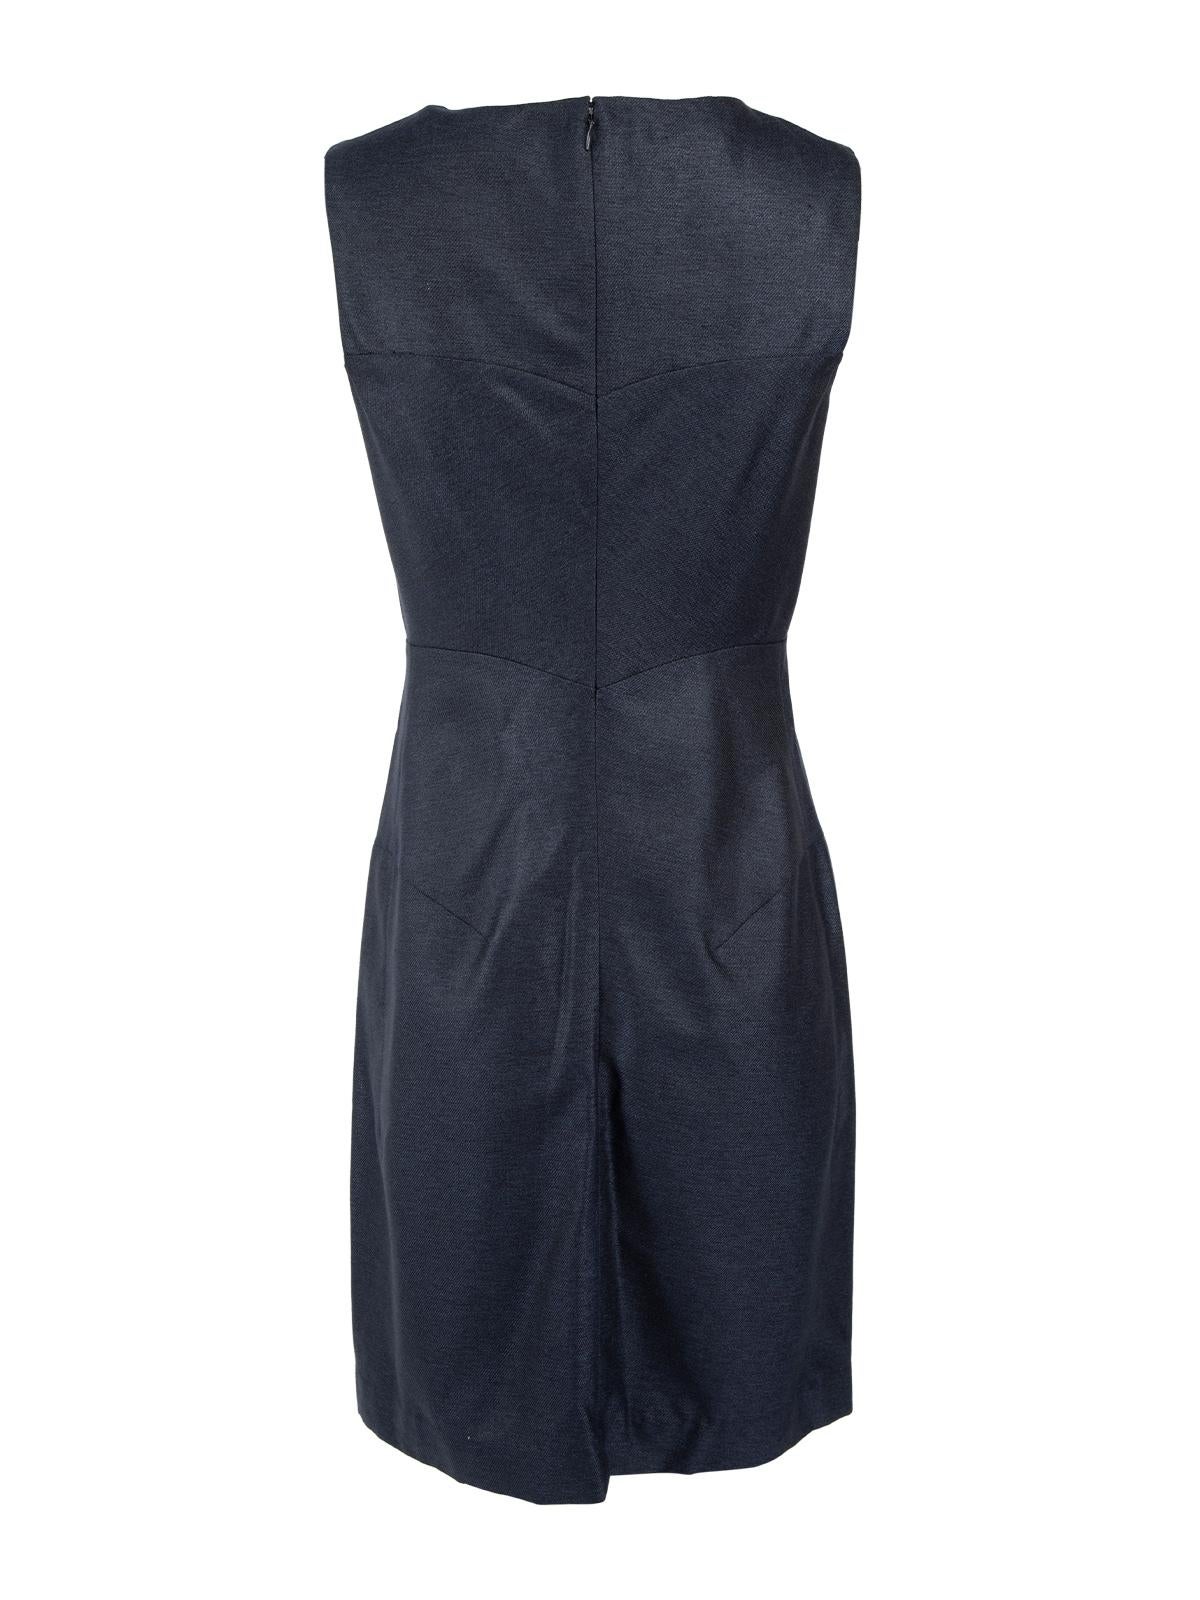 Black Jil Sander Sleeveless Denim Style Dress Size XXS